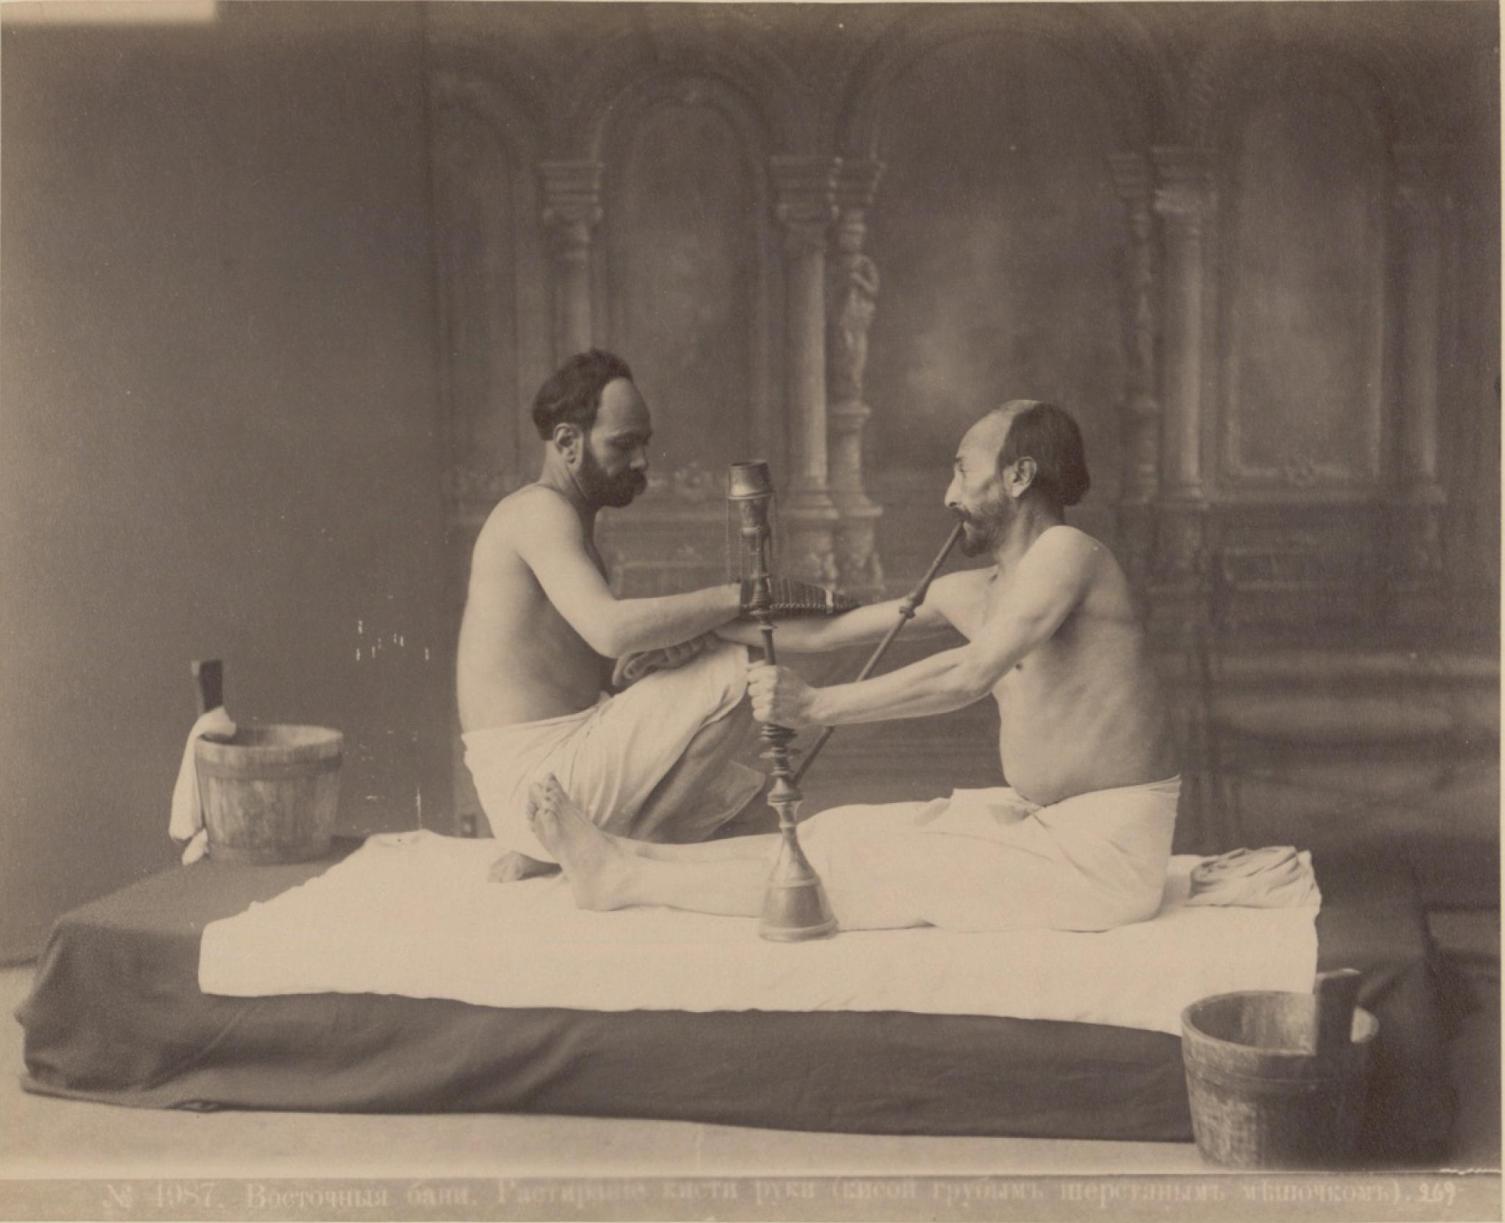 George massage. Массаж в Тбилиси 1890. Массаж в древности. Массаж Восточный древний. Медицина древнего Востока.